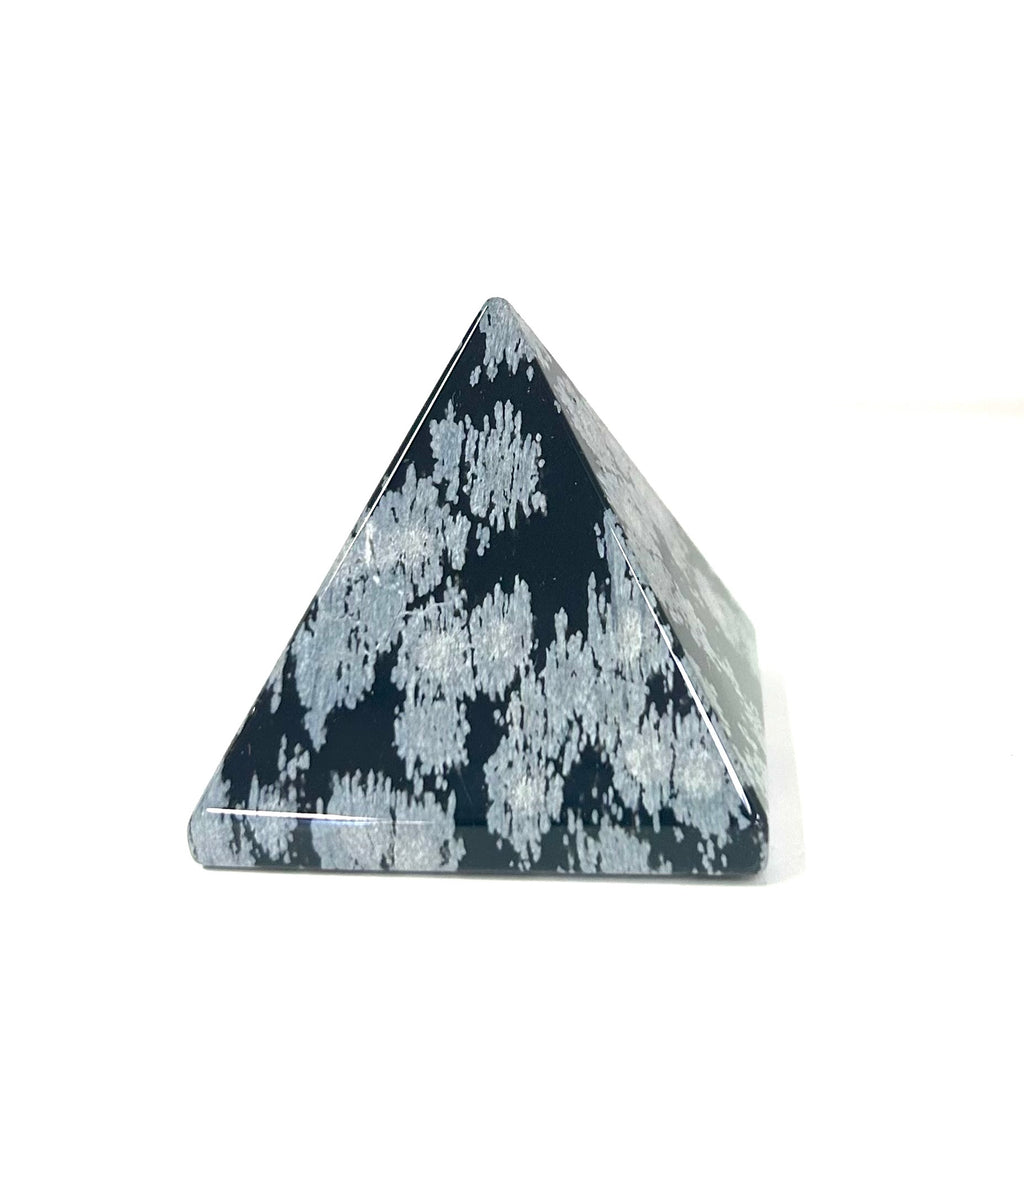 Snowflake Obsidian Pyramid - Lighten Up Shop